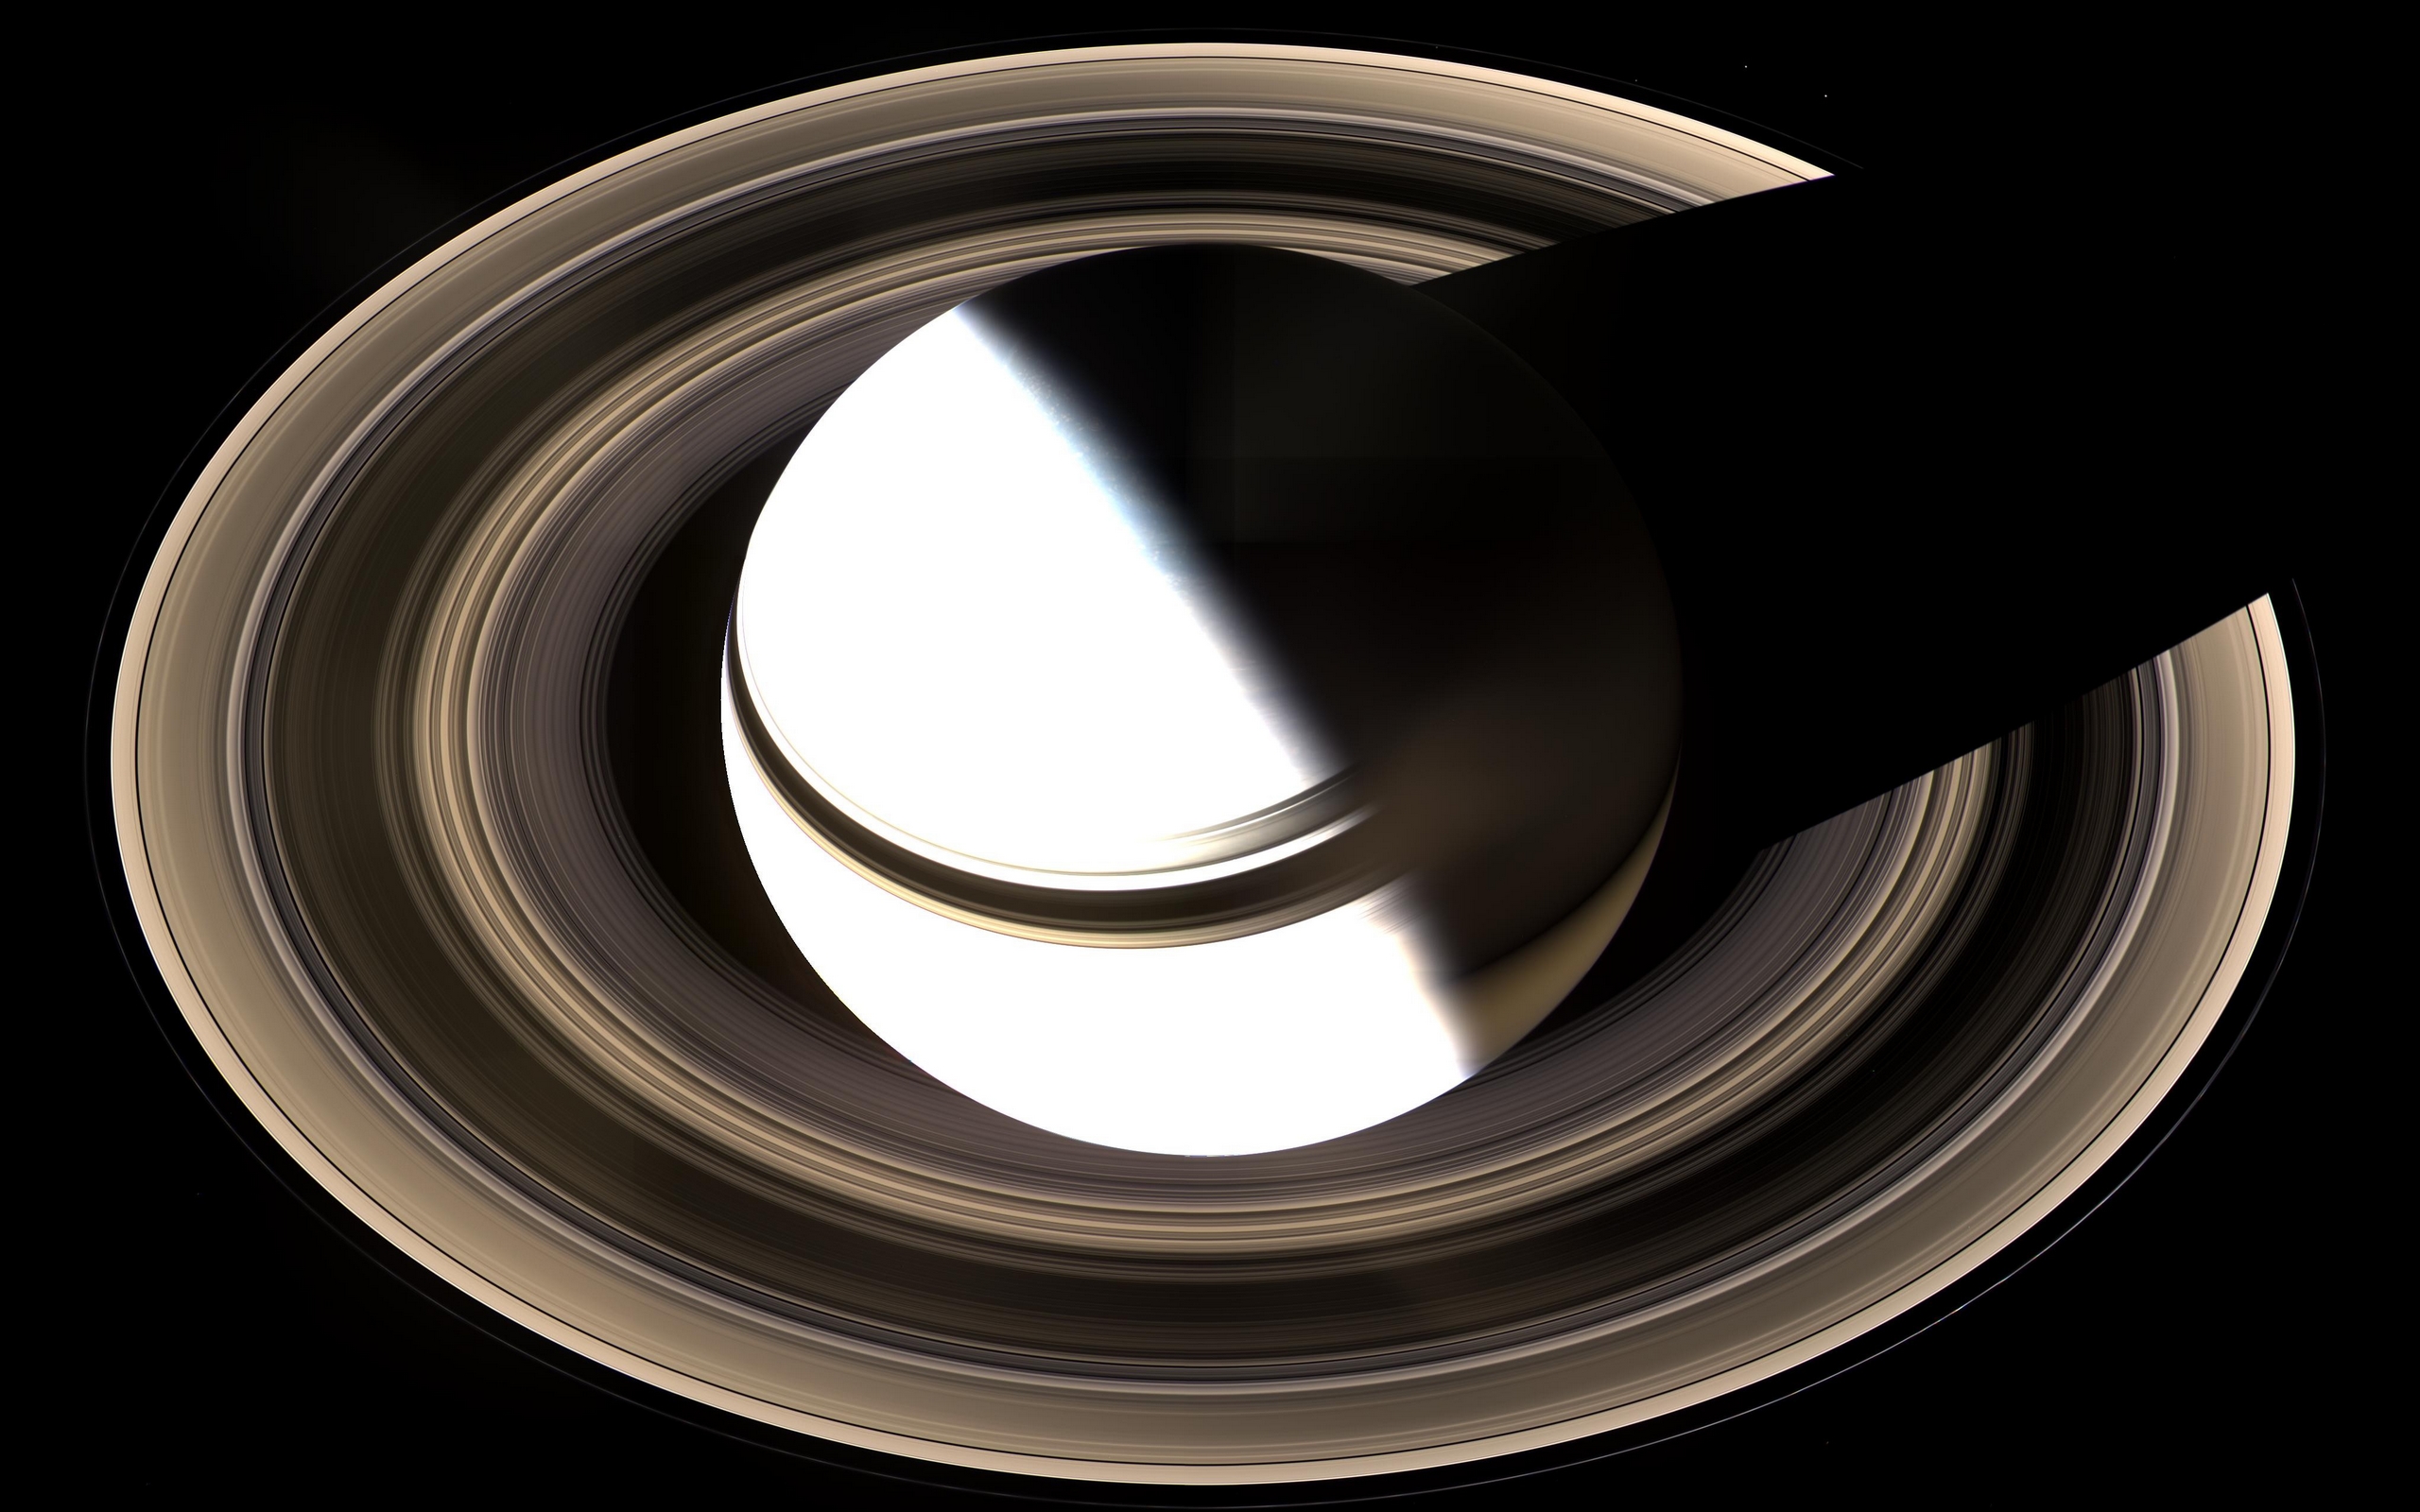 Wallpapers Saturn rings real shot on the desktop